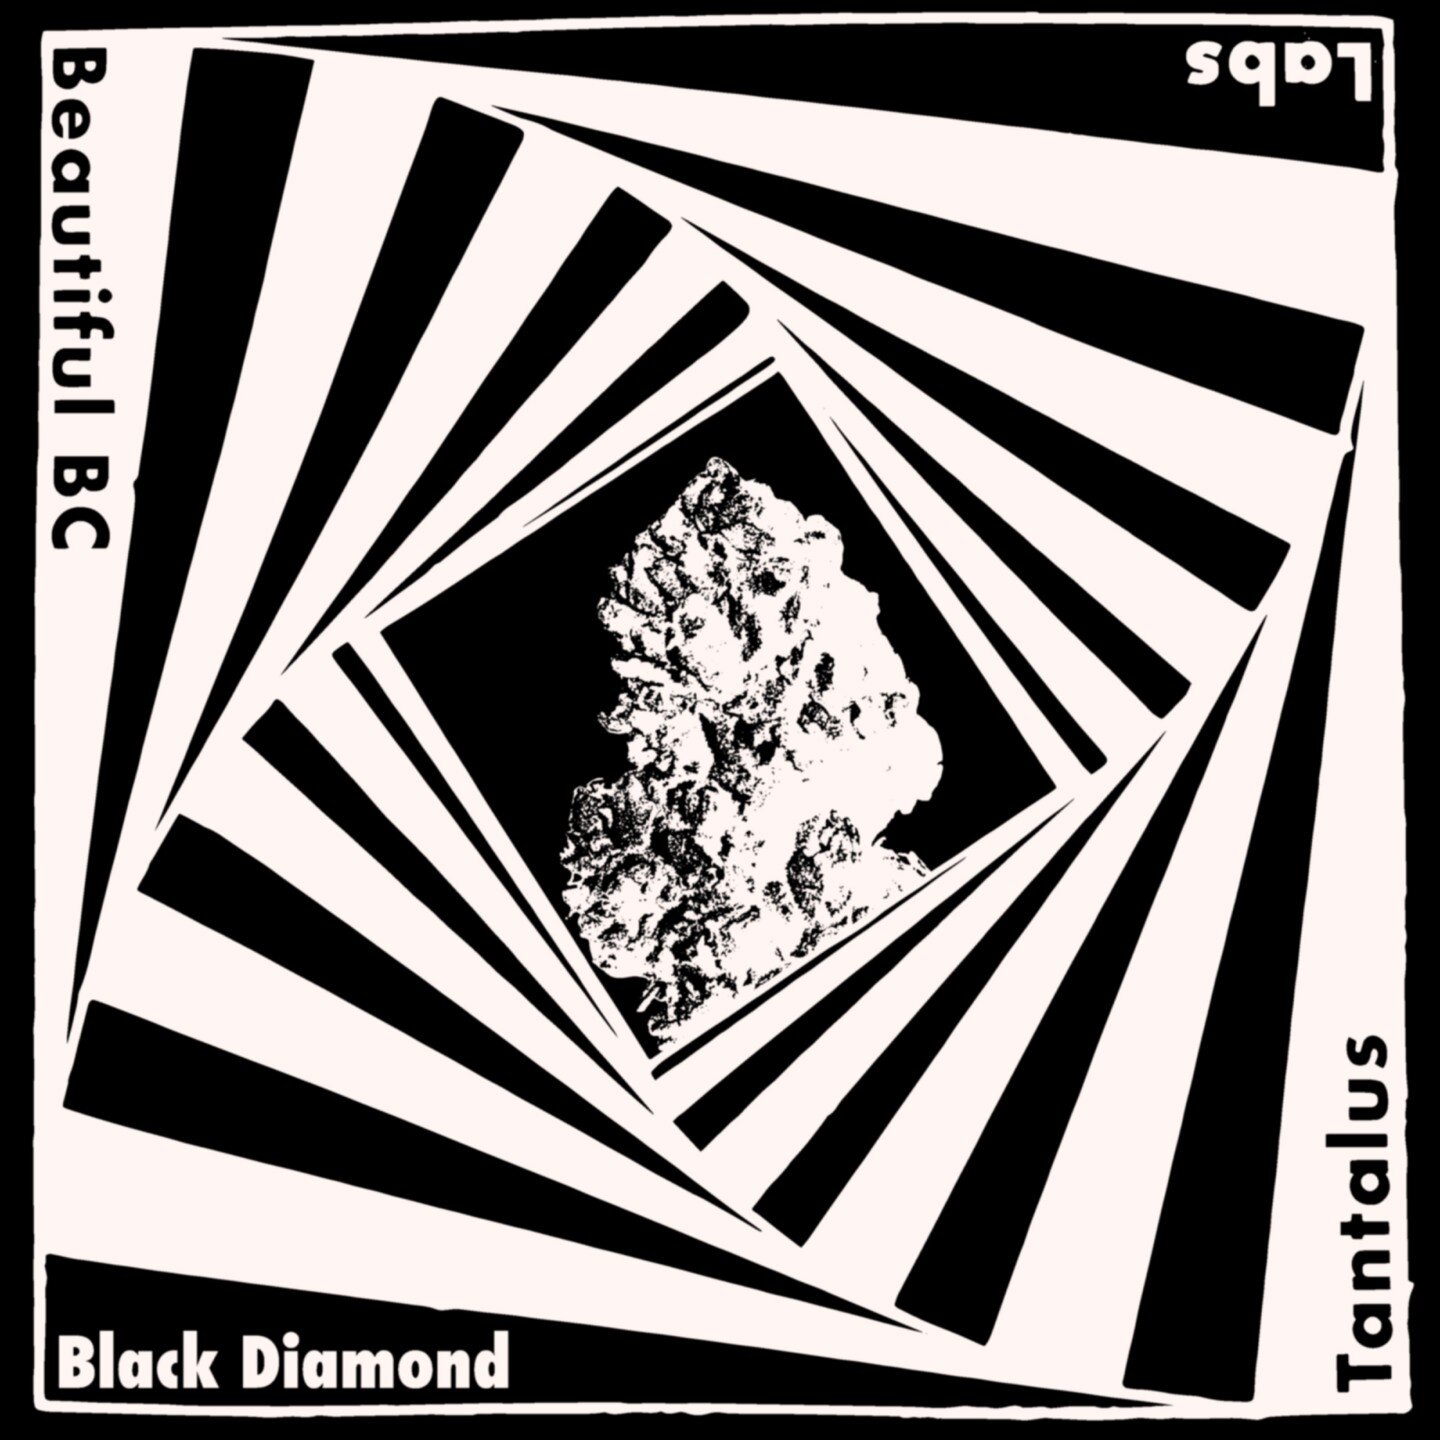 When the night peaks 🌝, Black Diamond shines. 🏔✨